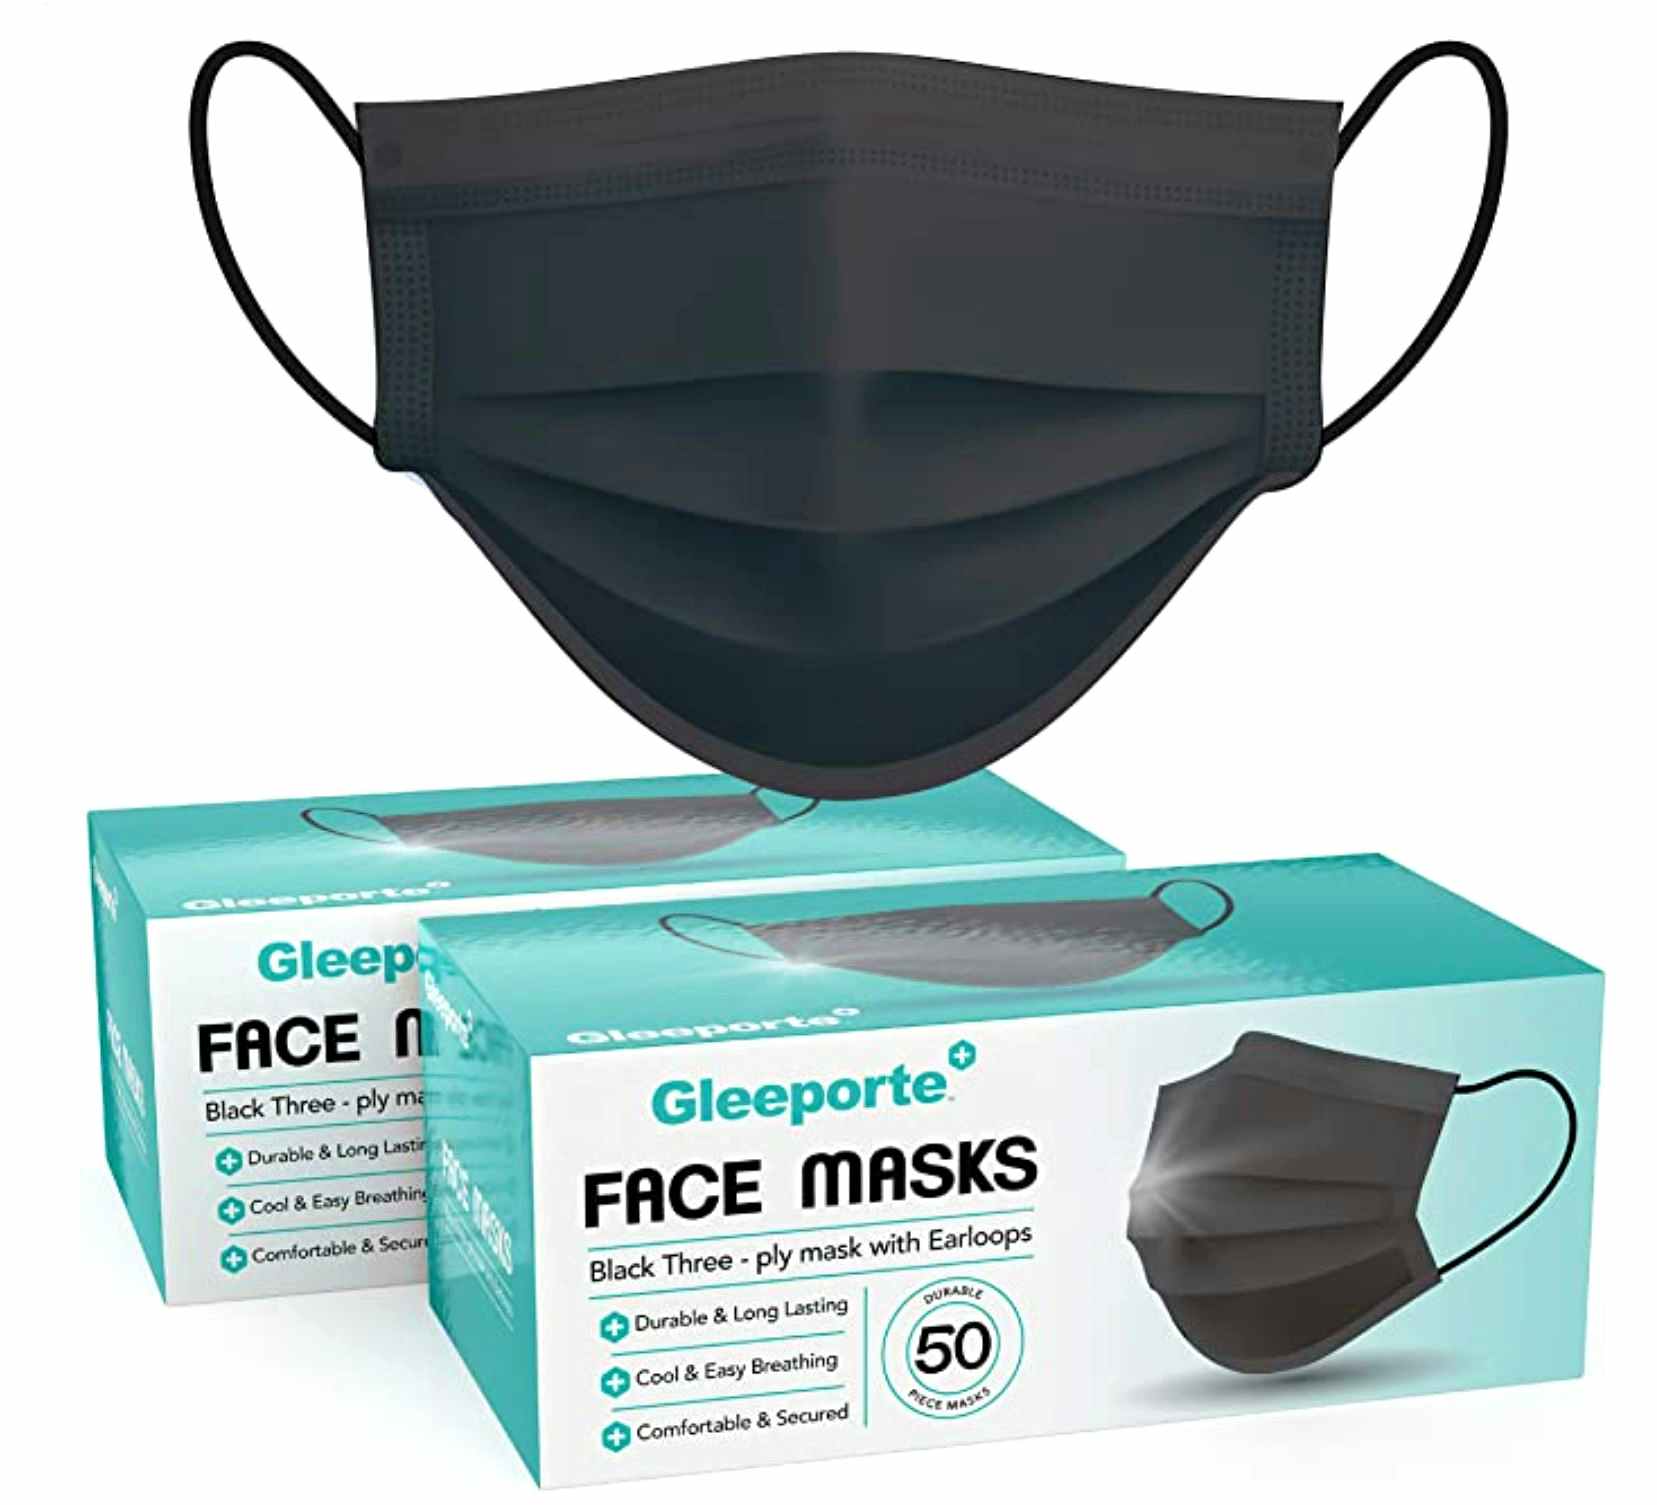 A set of Gleeporte disposable face masks.